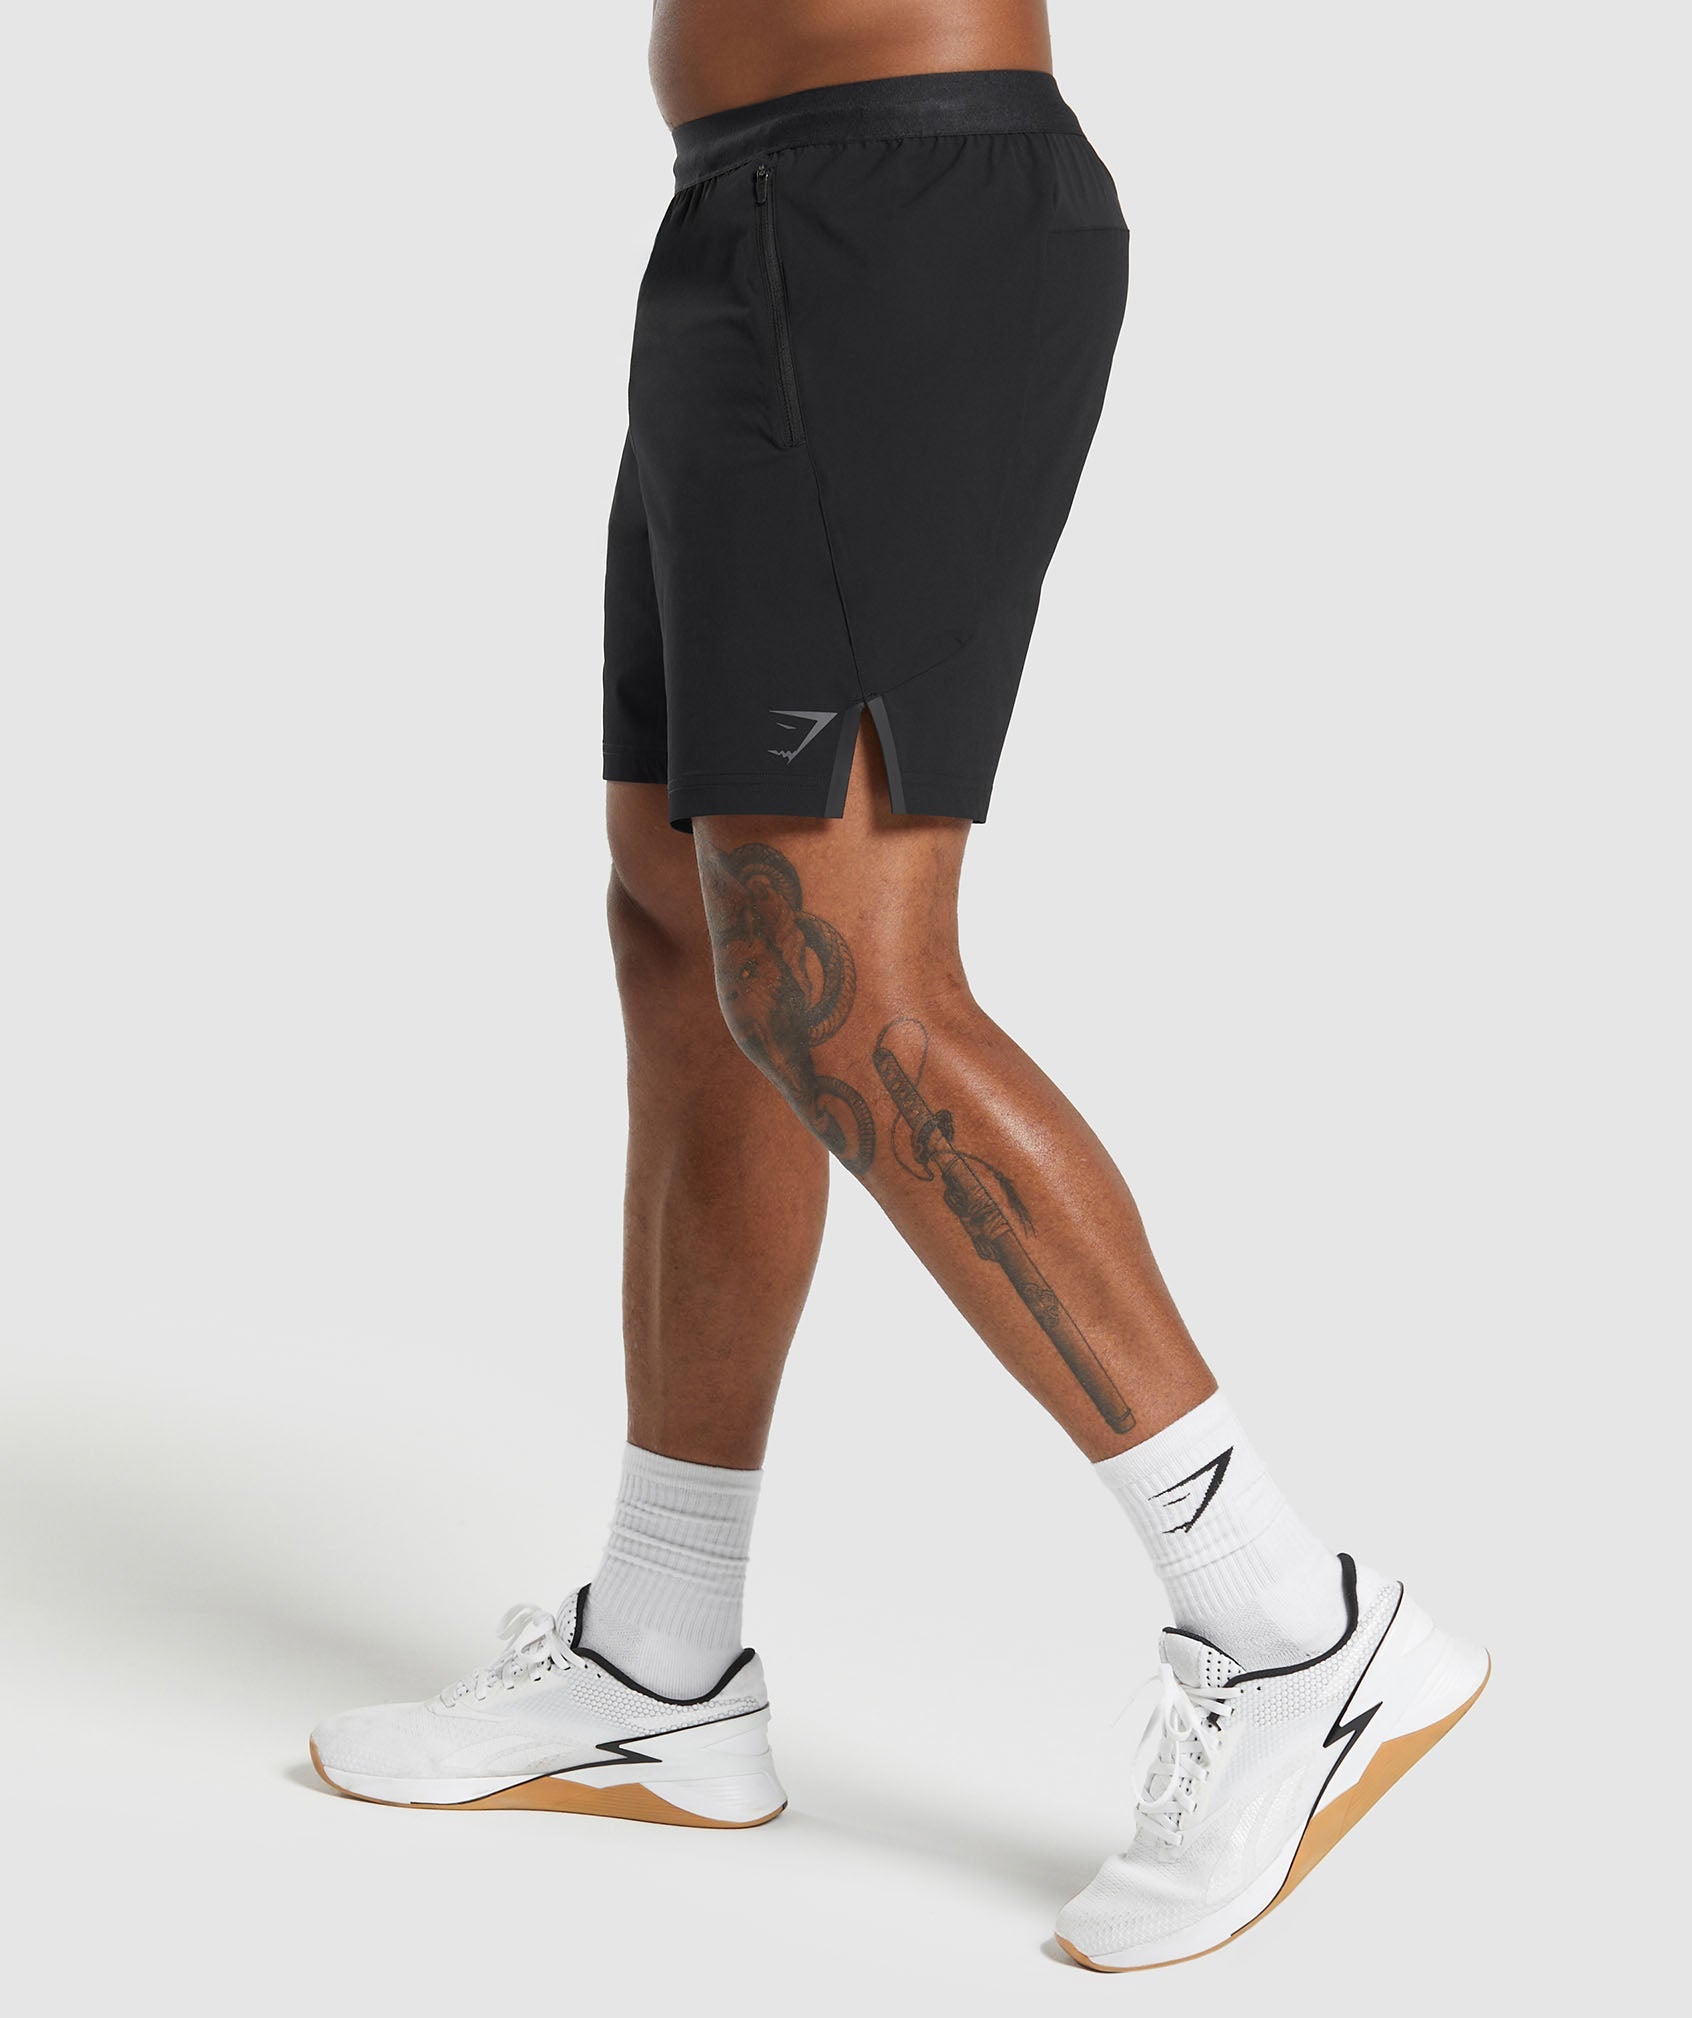 Apex 7" Hybrid Shorts in Black - view 3